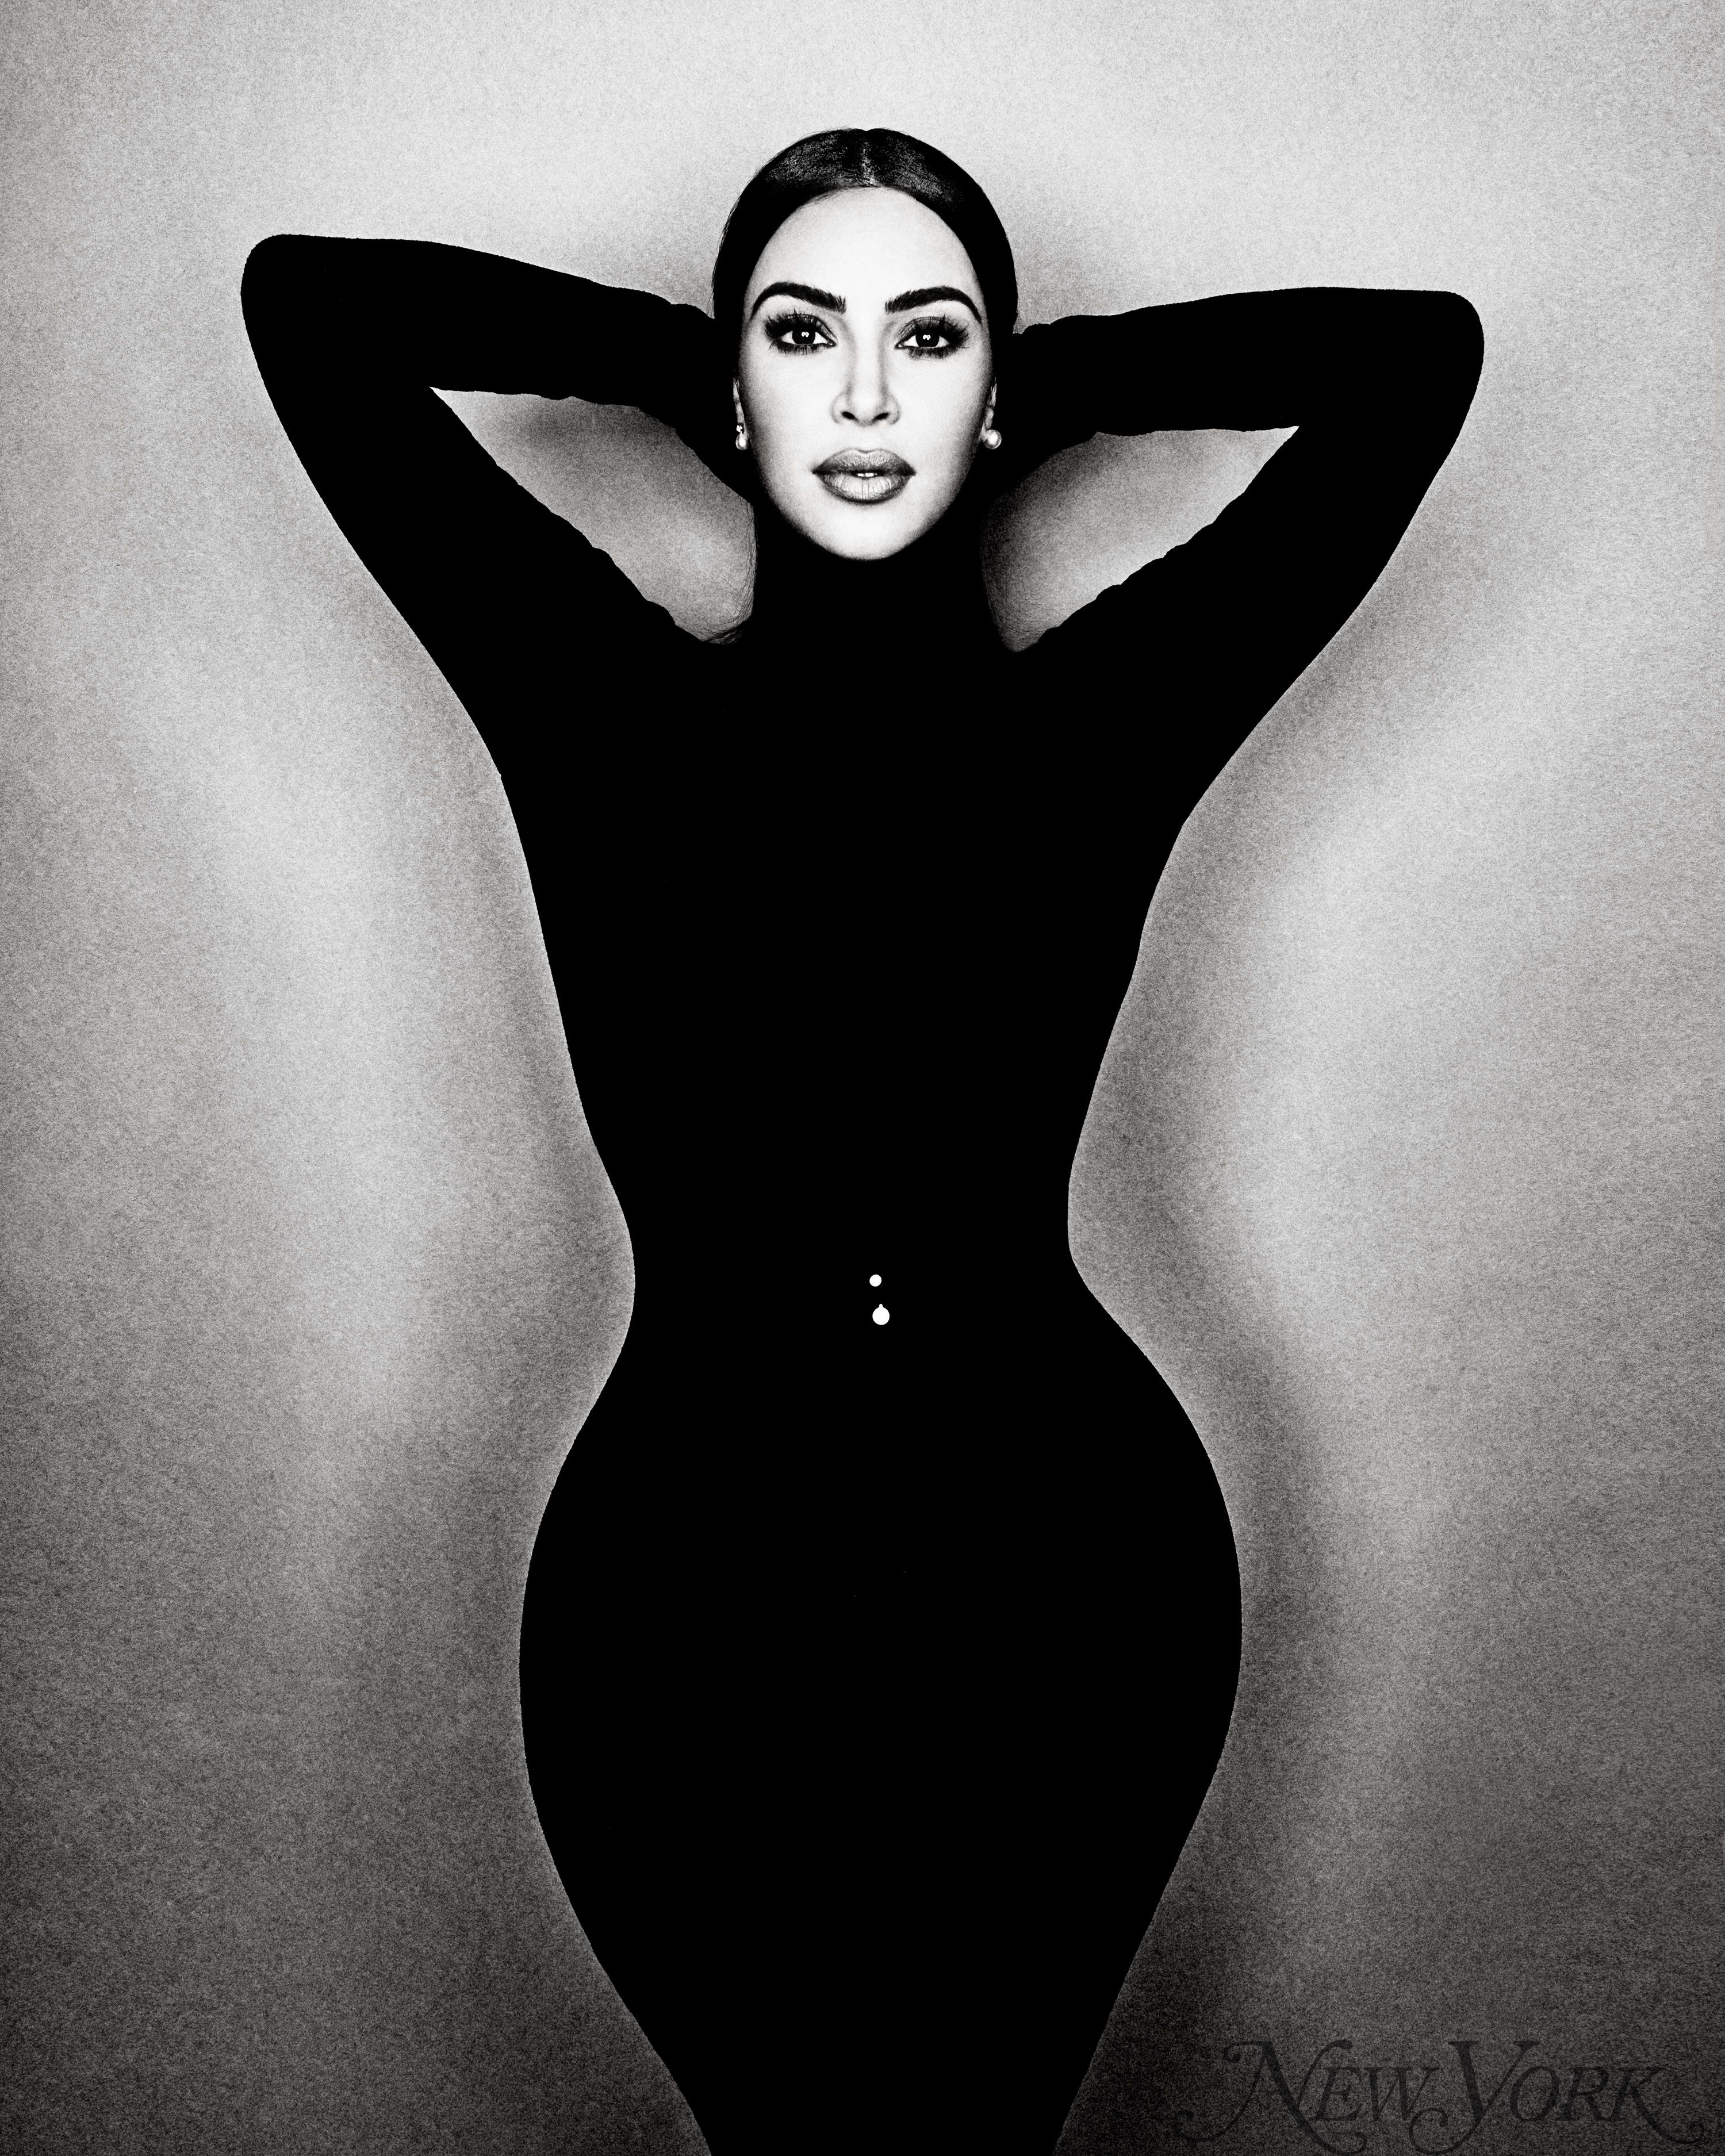 Kim Kardashian West on Her Decade of Multi-Platform Fame